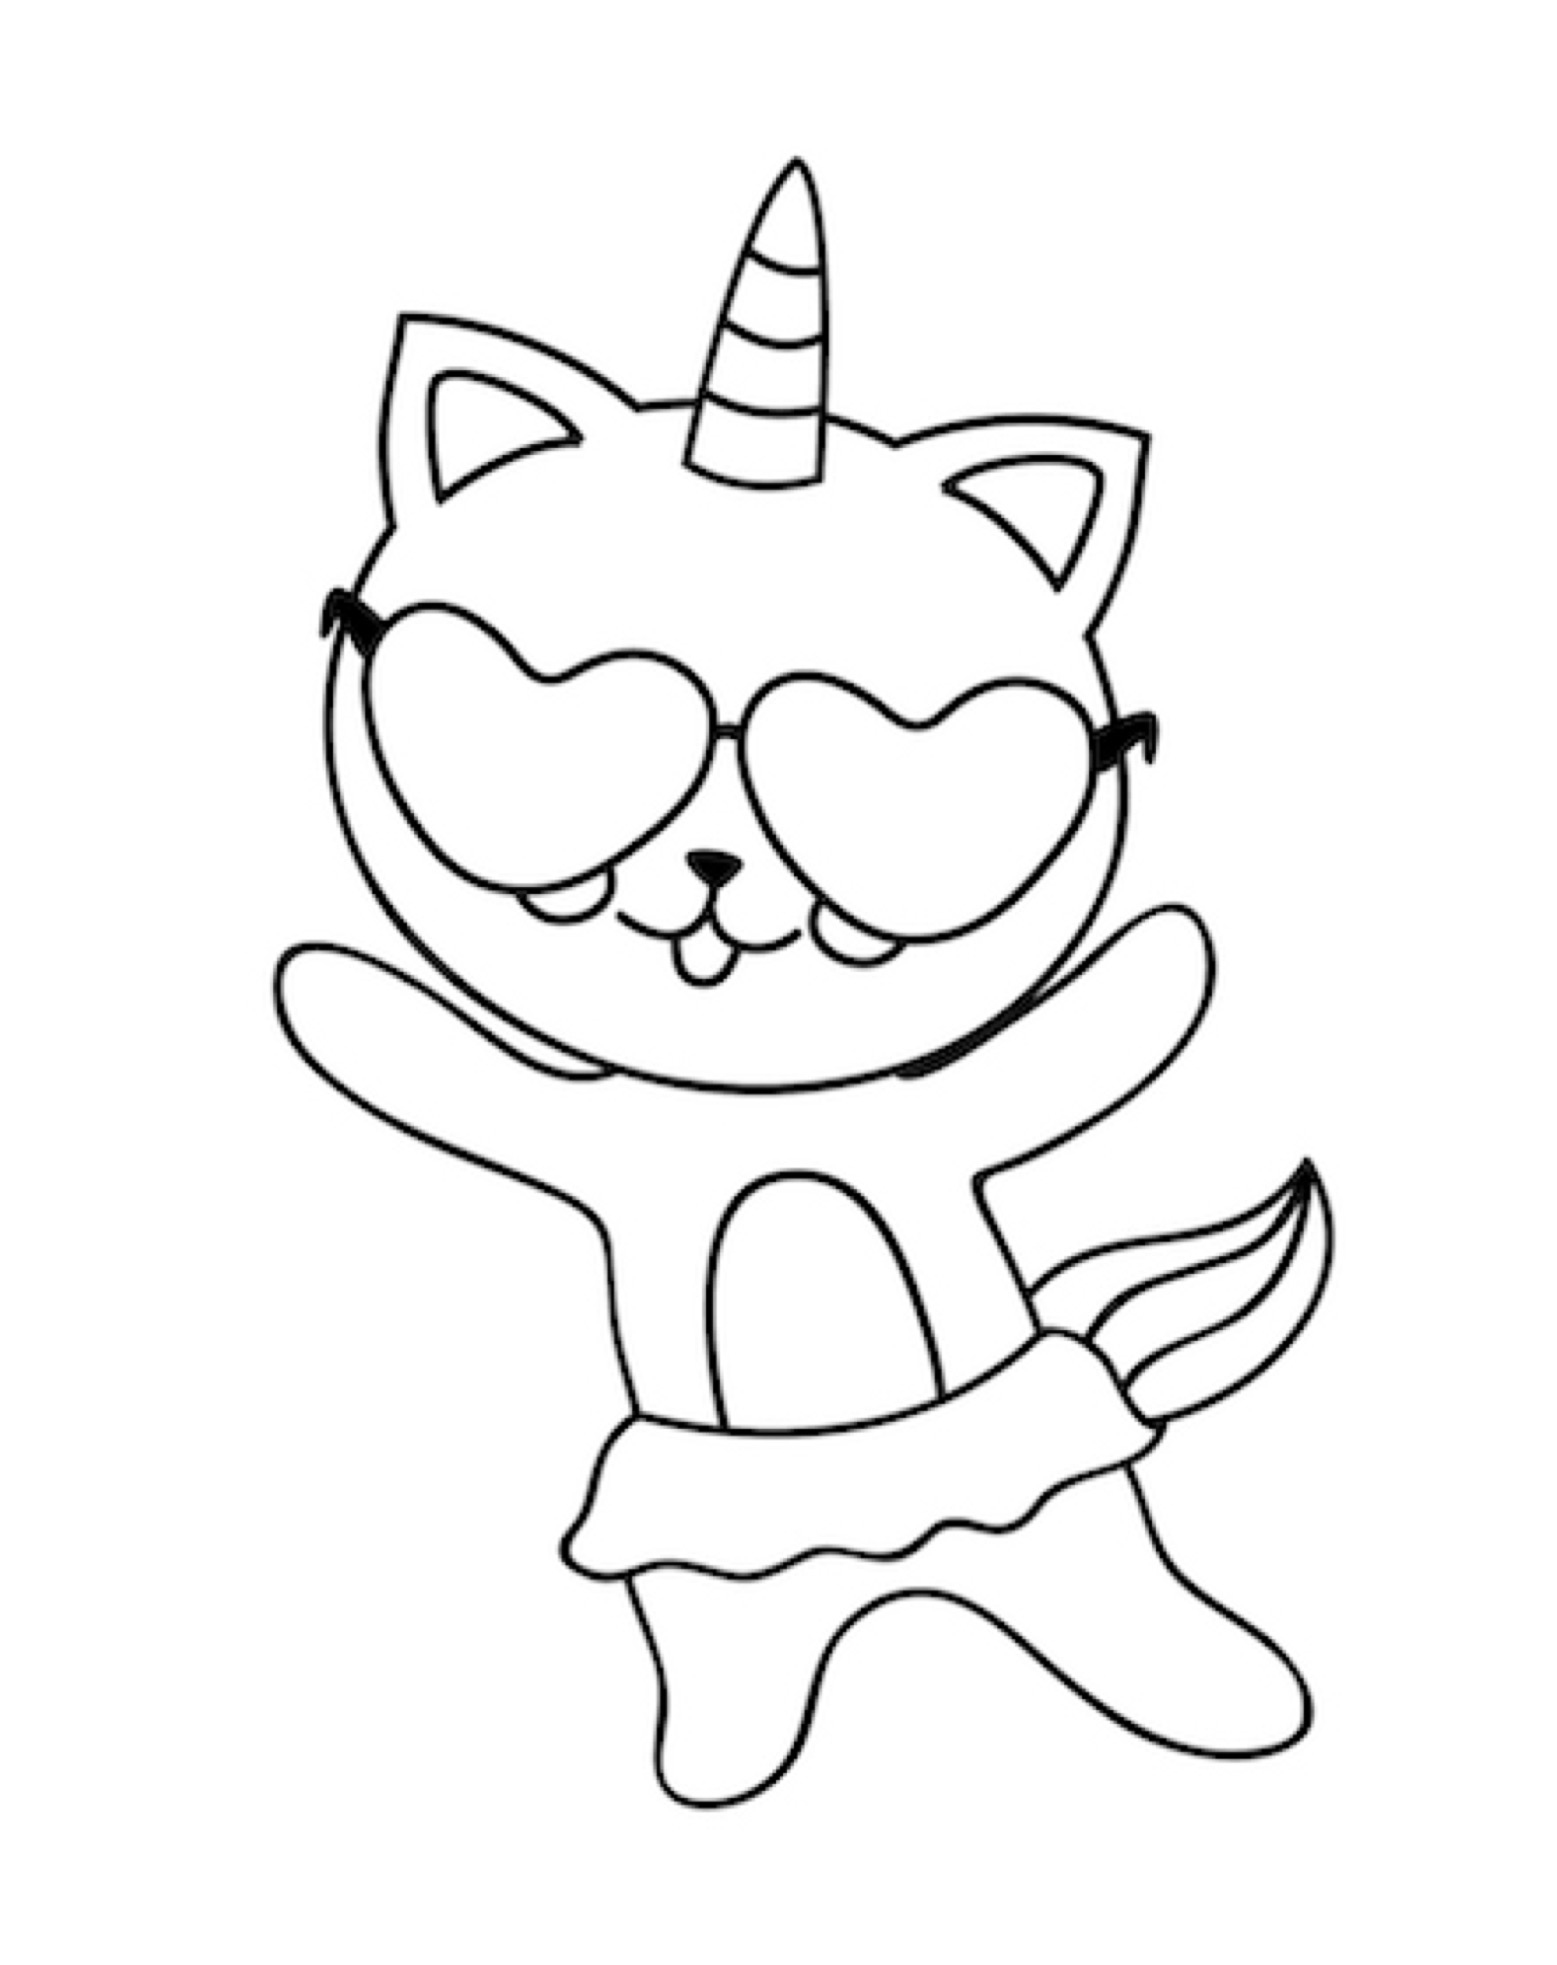 dancing-unicorn-cat-coloring-pages-cat-coloring-pages-coloring-pages-for-kids-and-adults